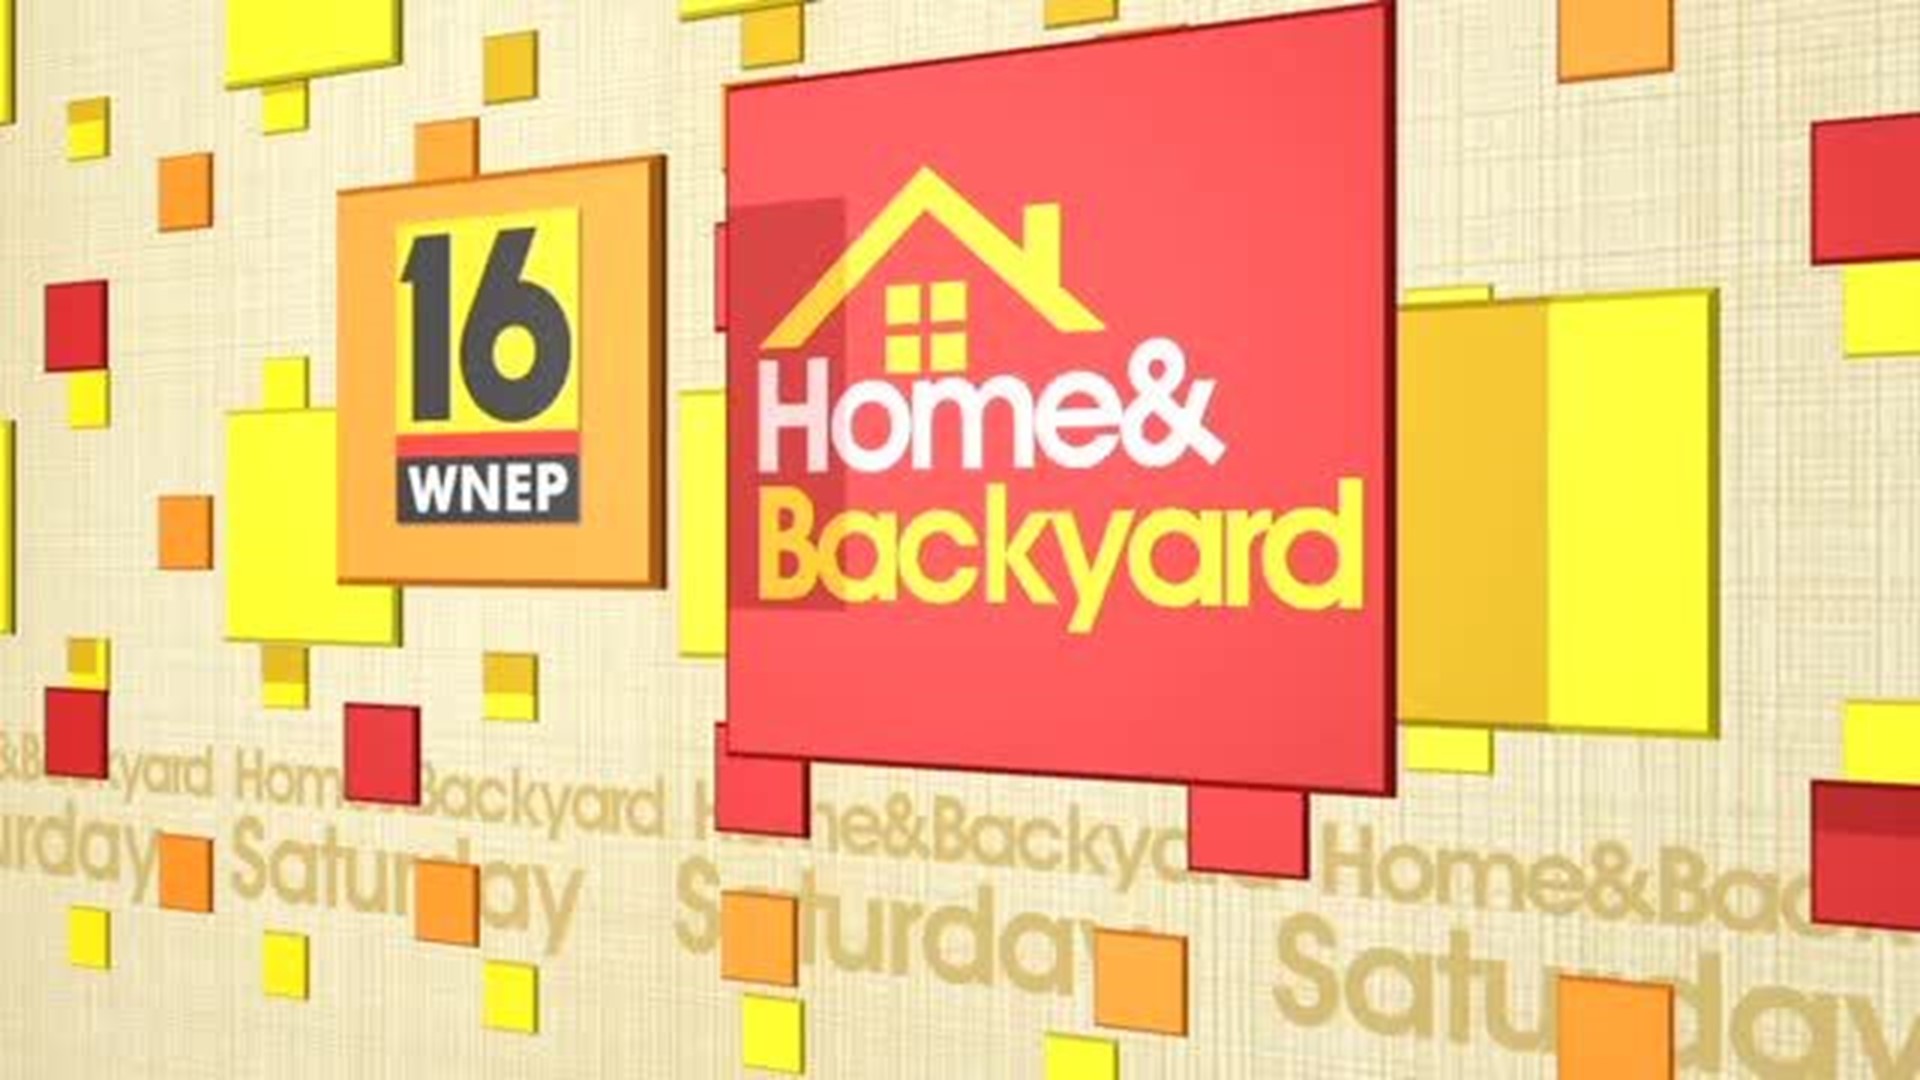 Home & Backyard Promo 2-9-13